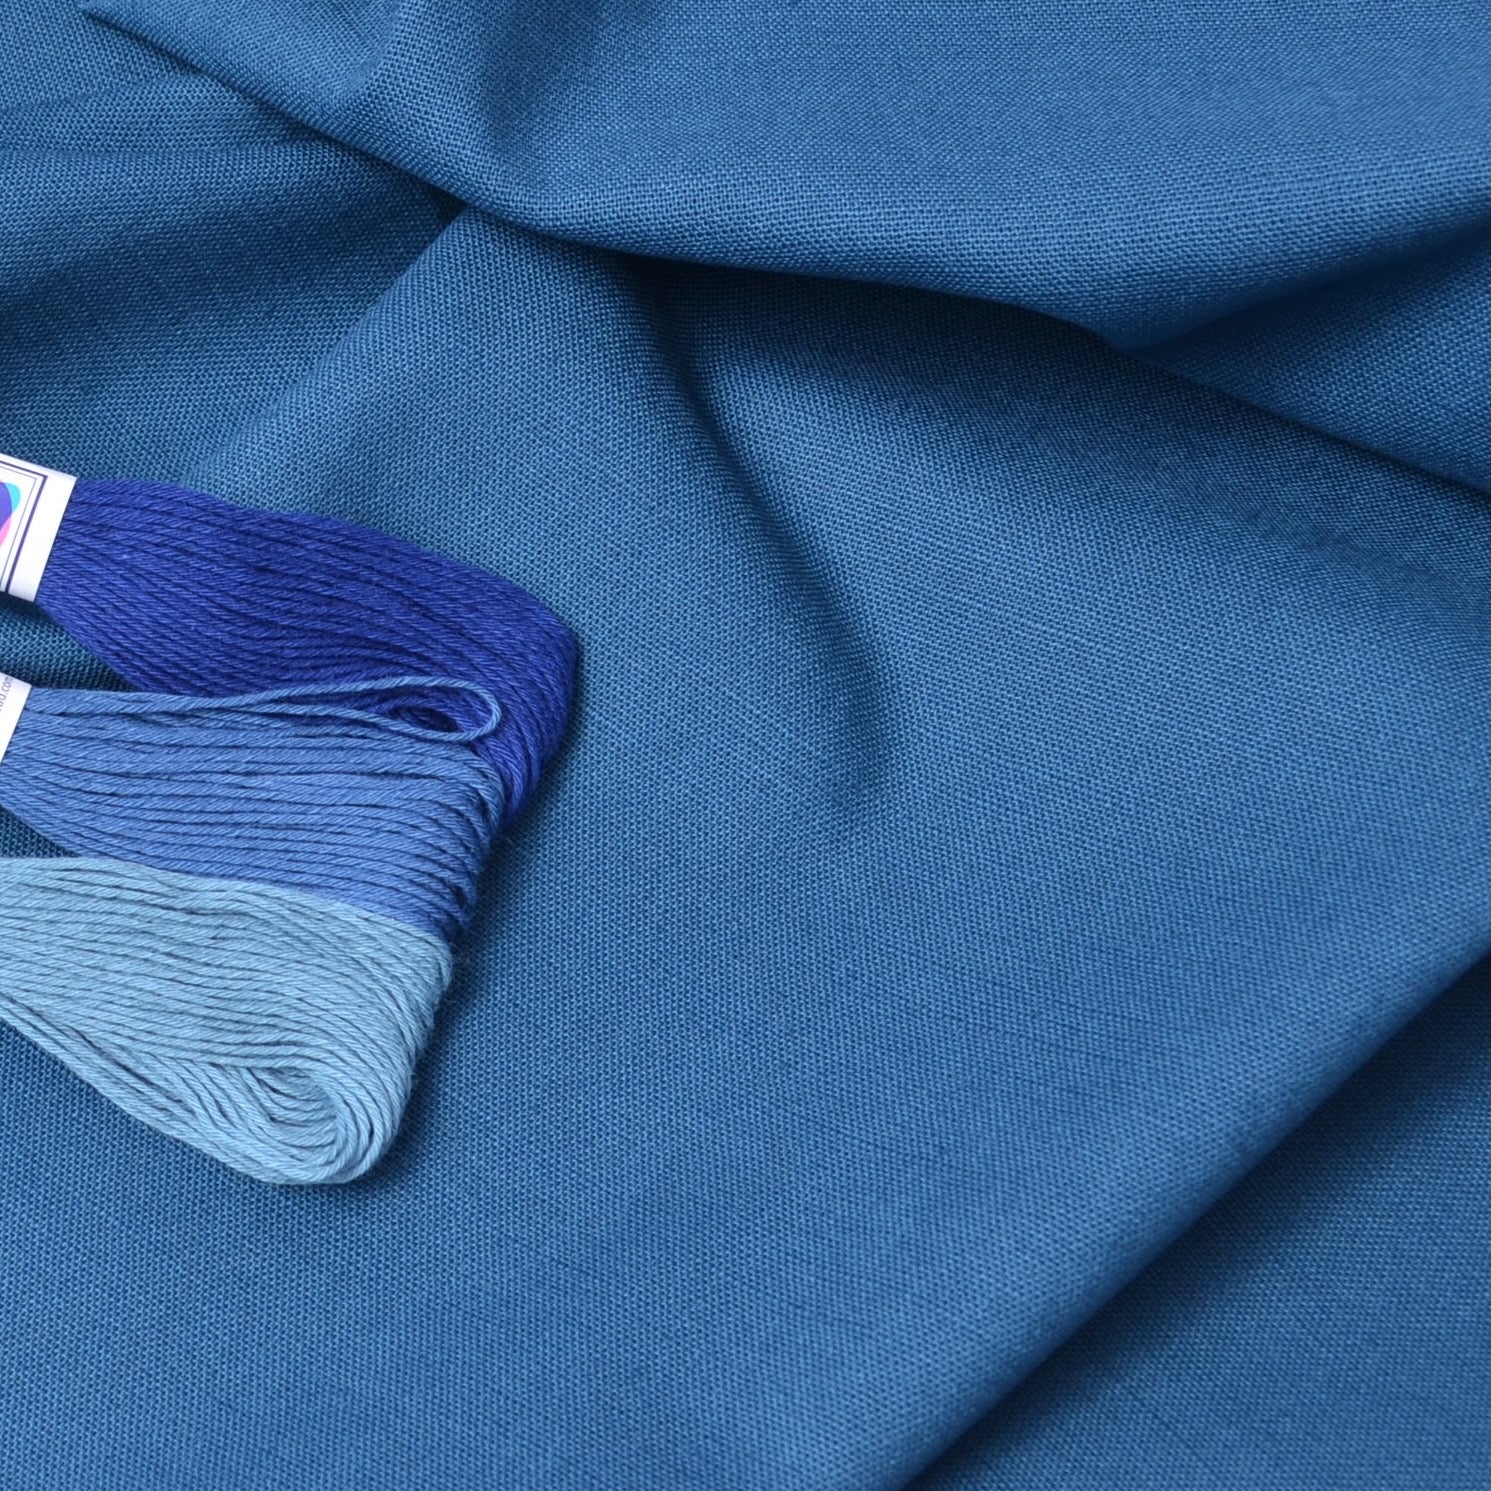 blue cotton fabric for sashiko stitching